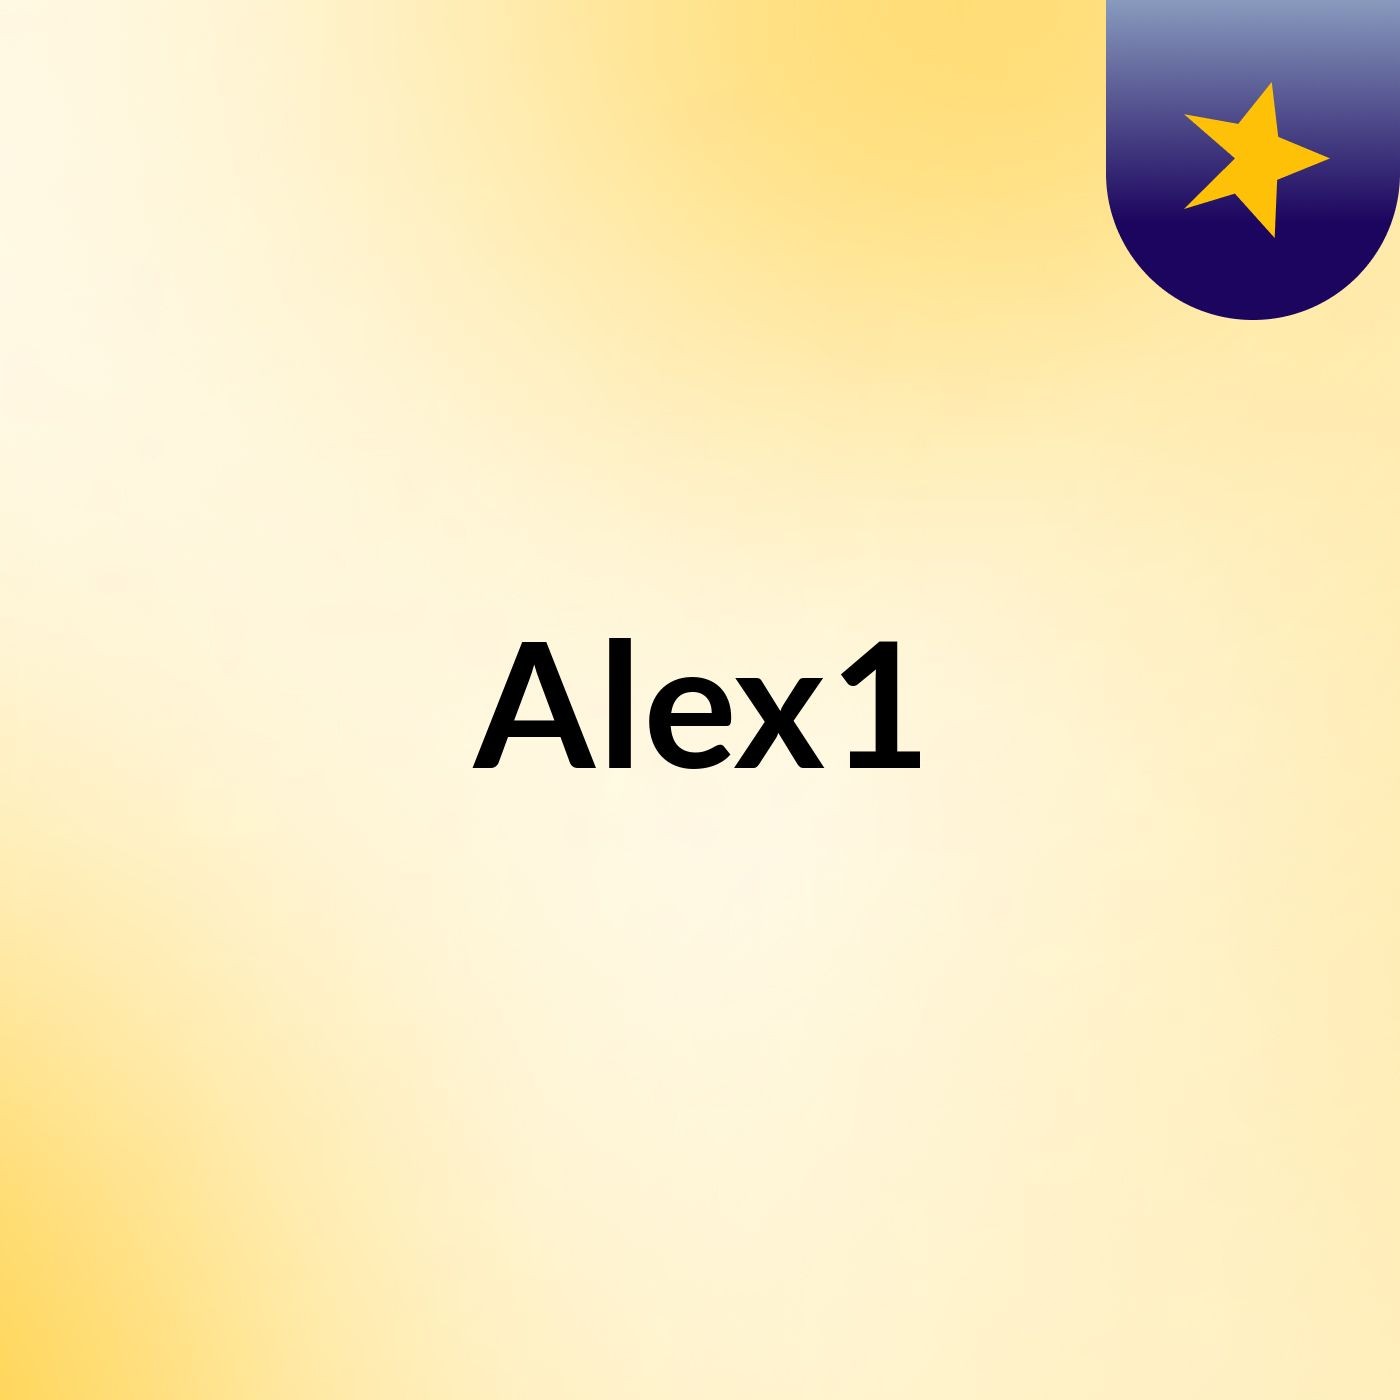 Alex1